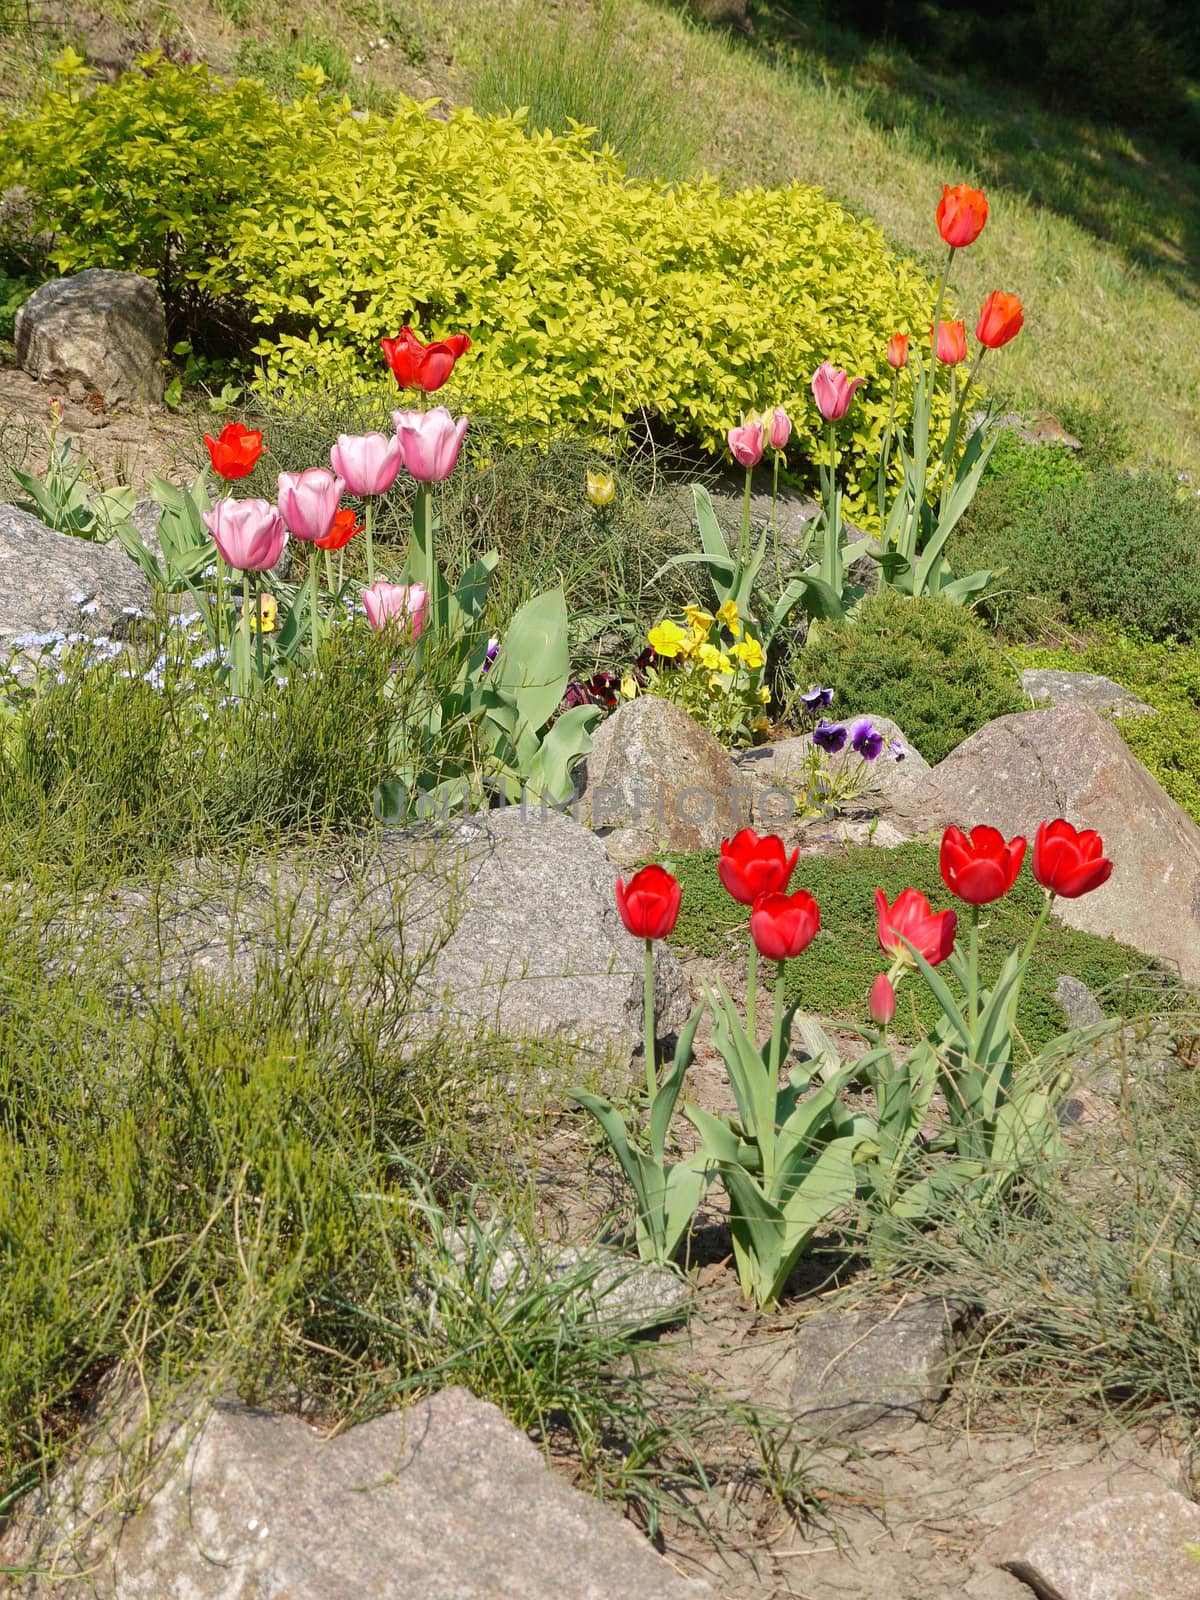 beautiful tulips of different colors growing between stones